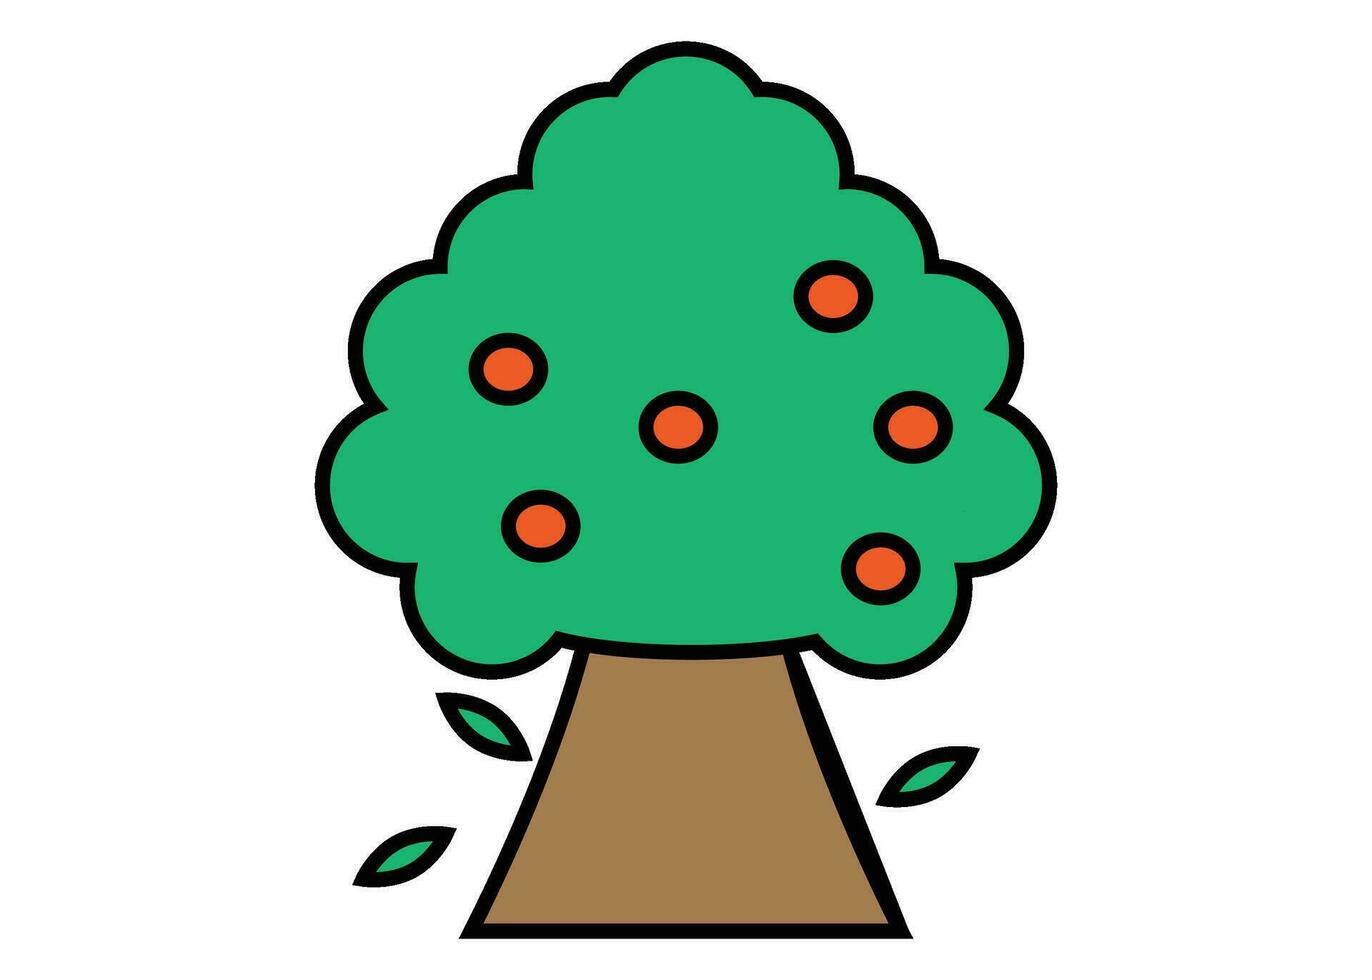 Peach tree icon clipart design illustration isolated vector